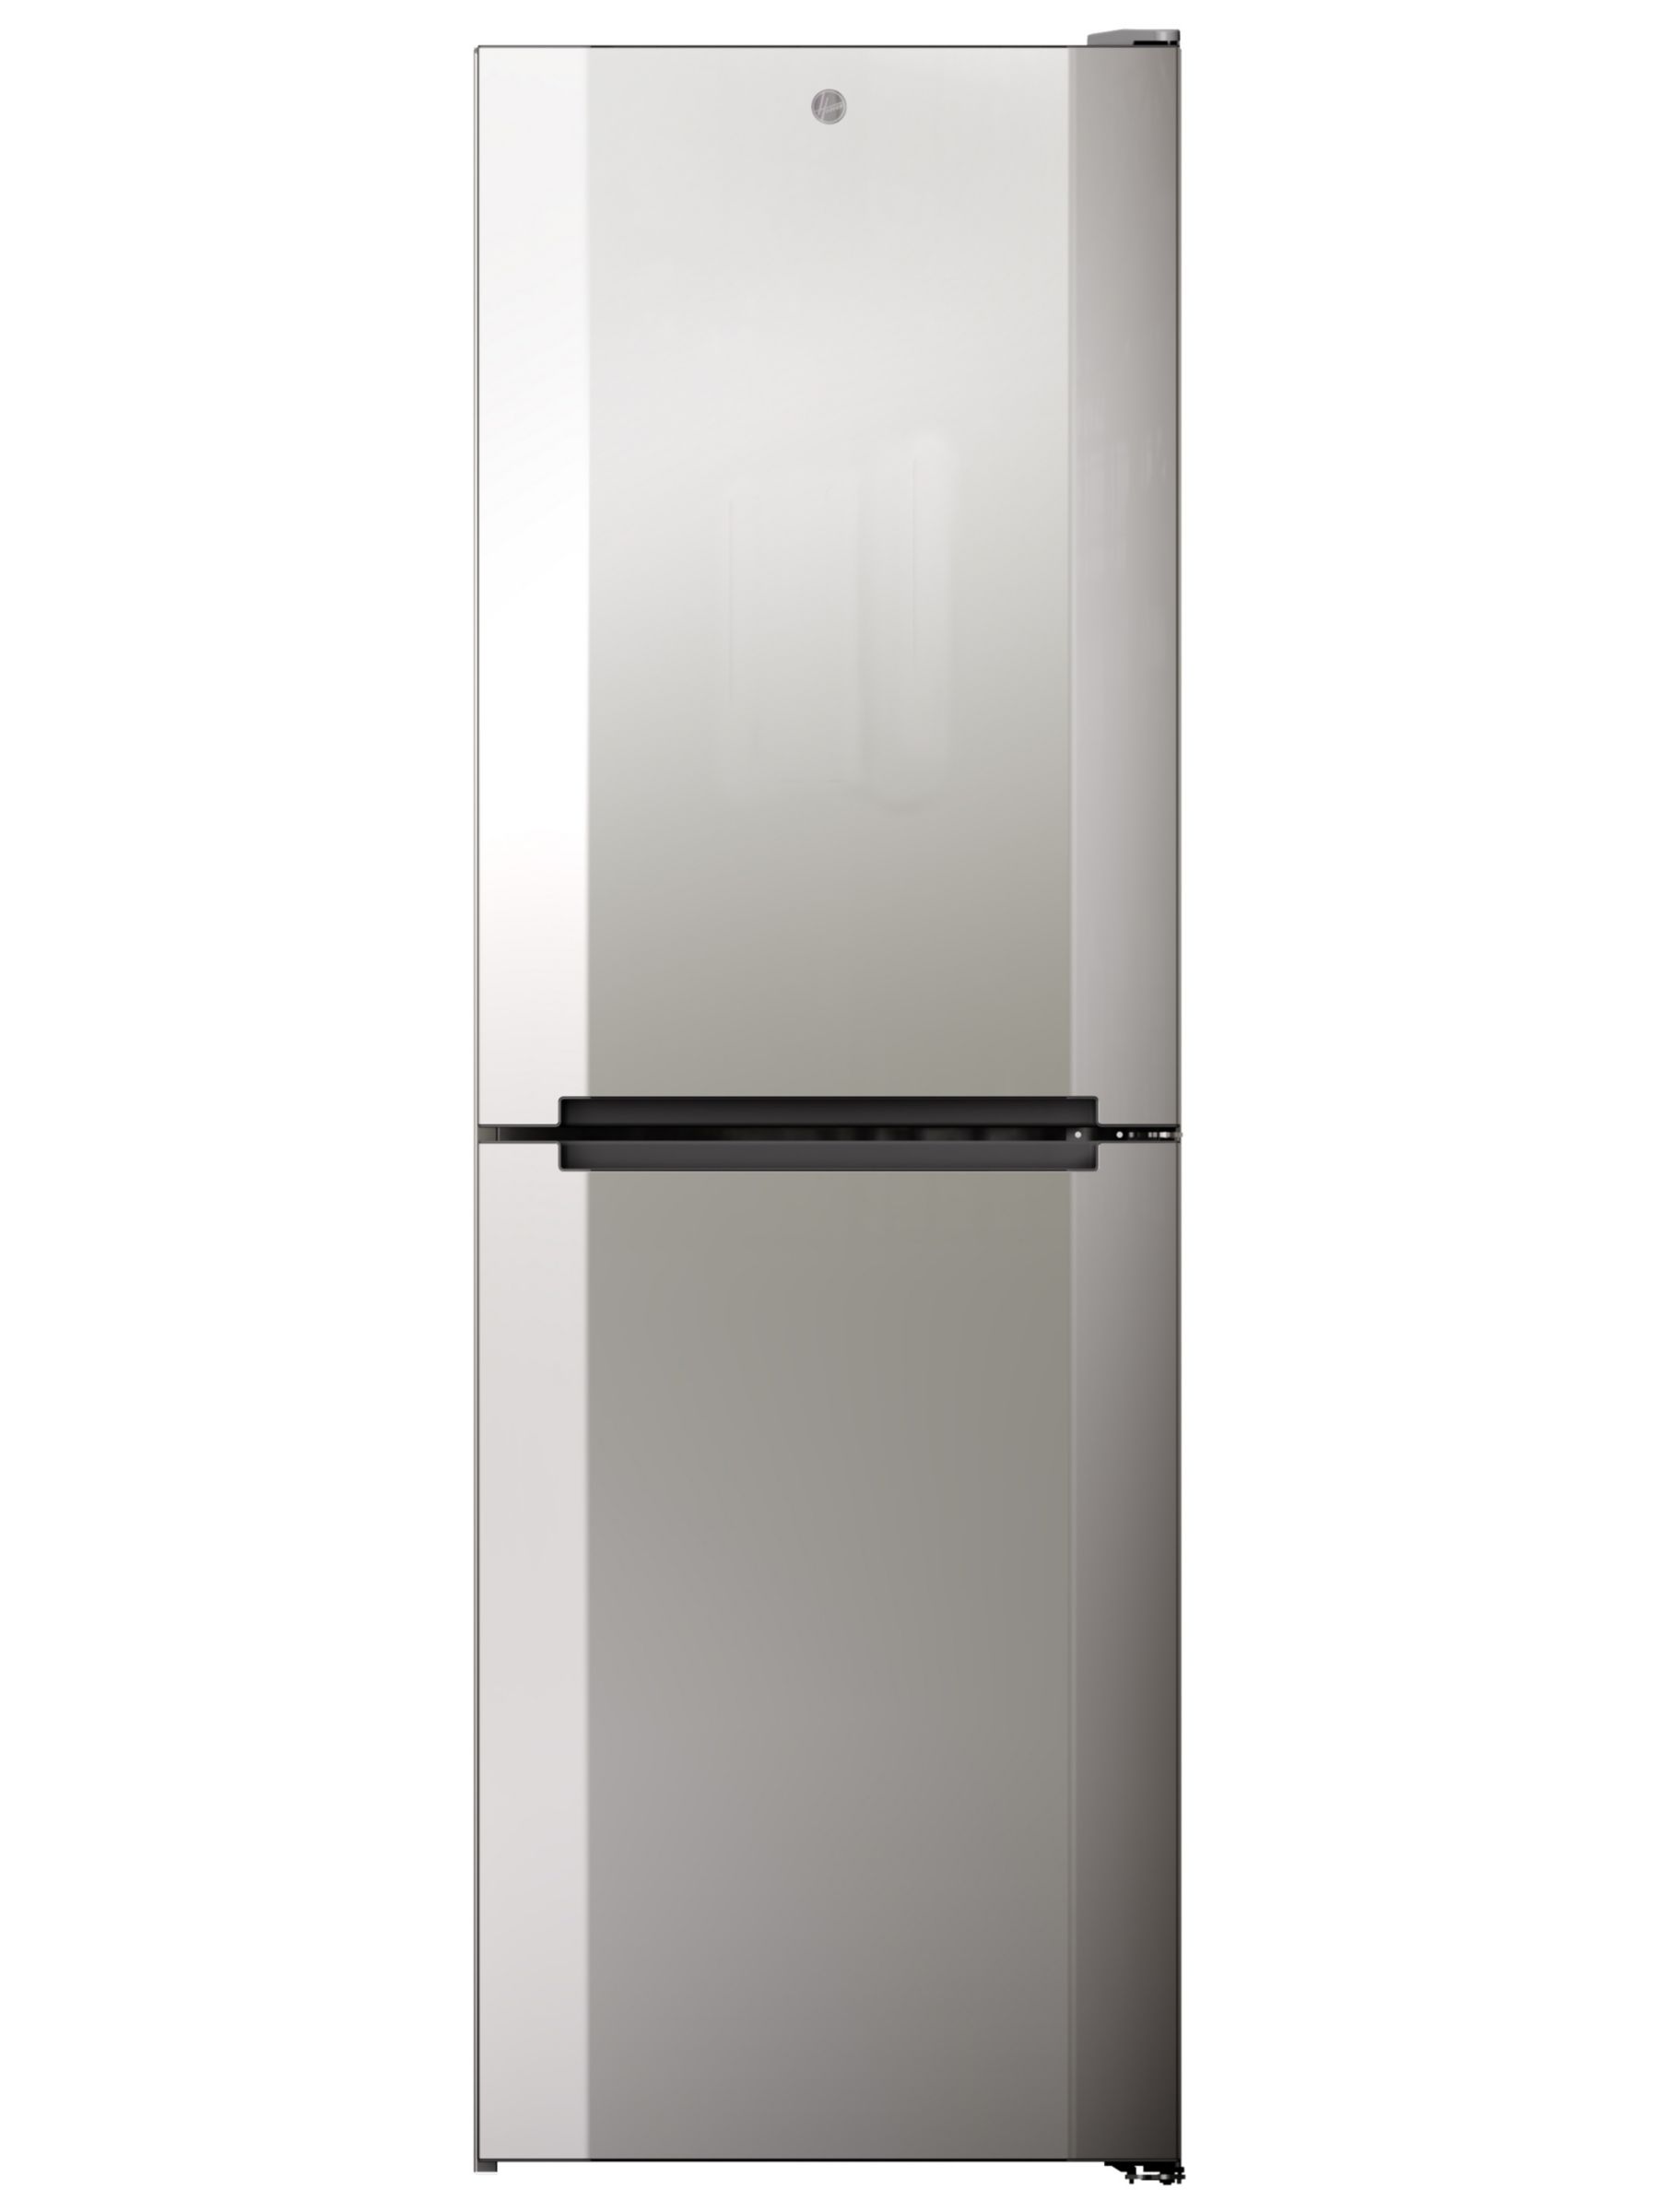 Hoover HMNB6182XK Freestanding Fridge Freezer, A+ Energy Rating, 60cm Wide, Grey